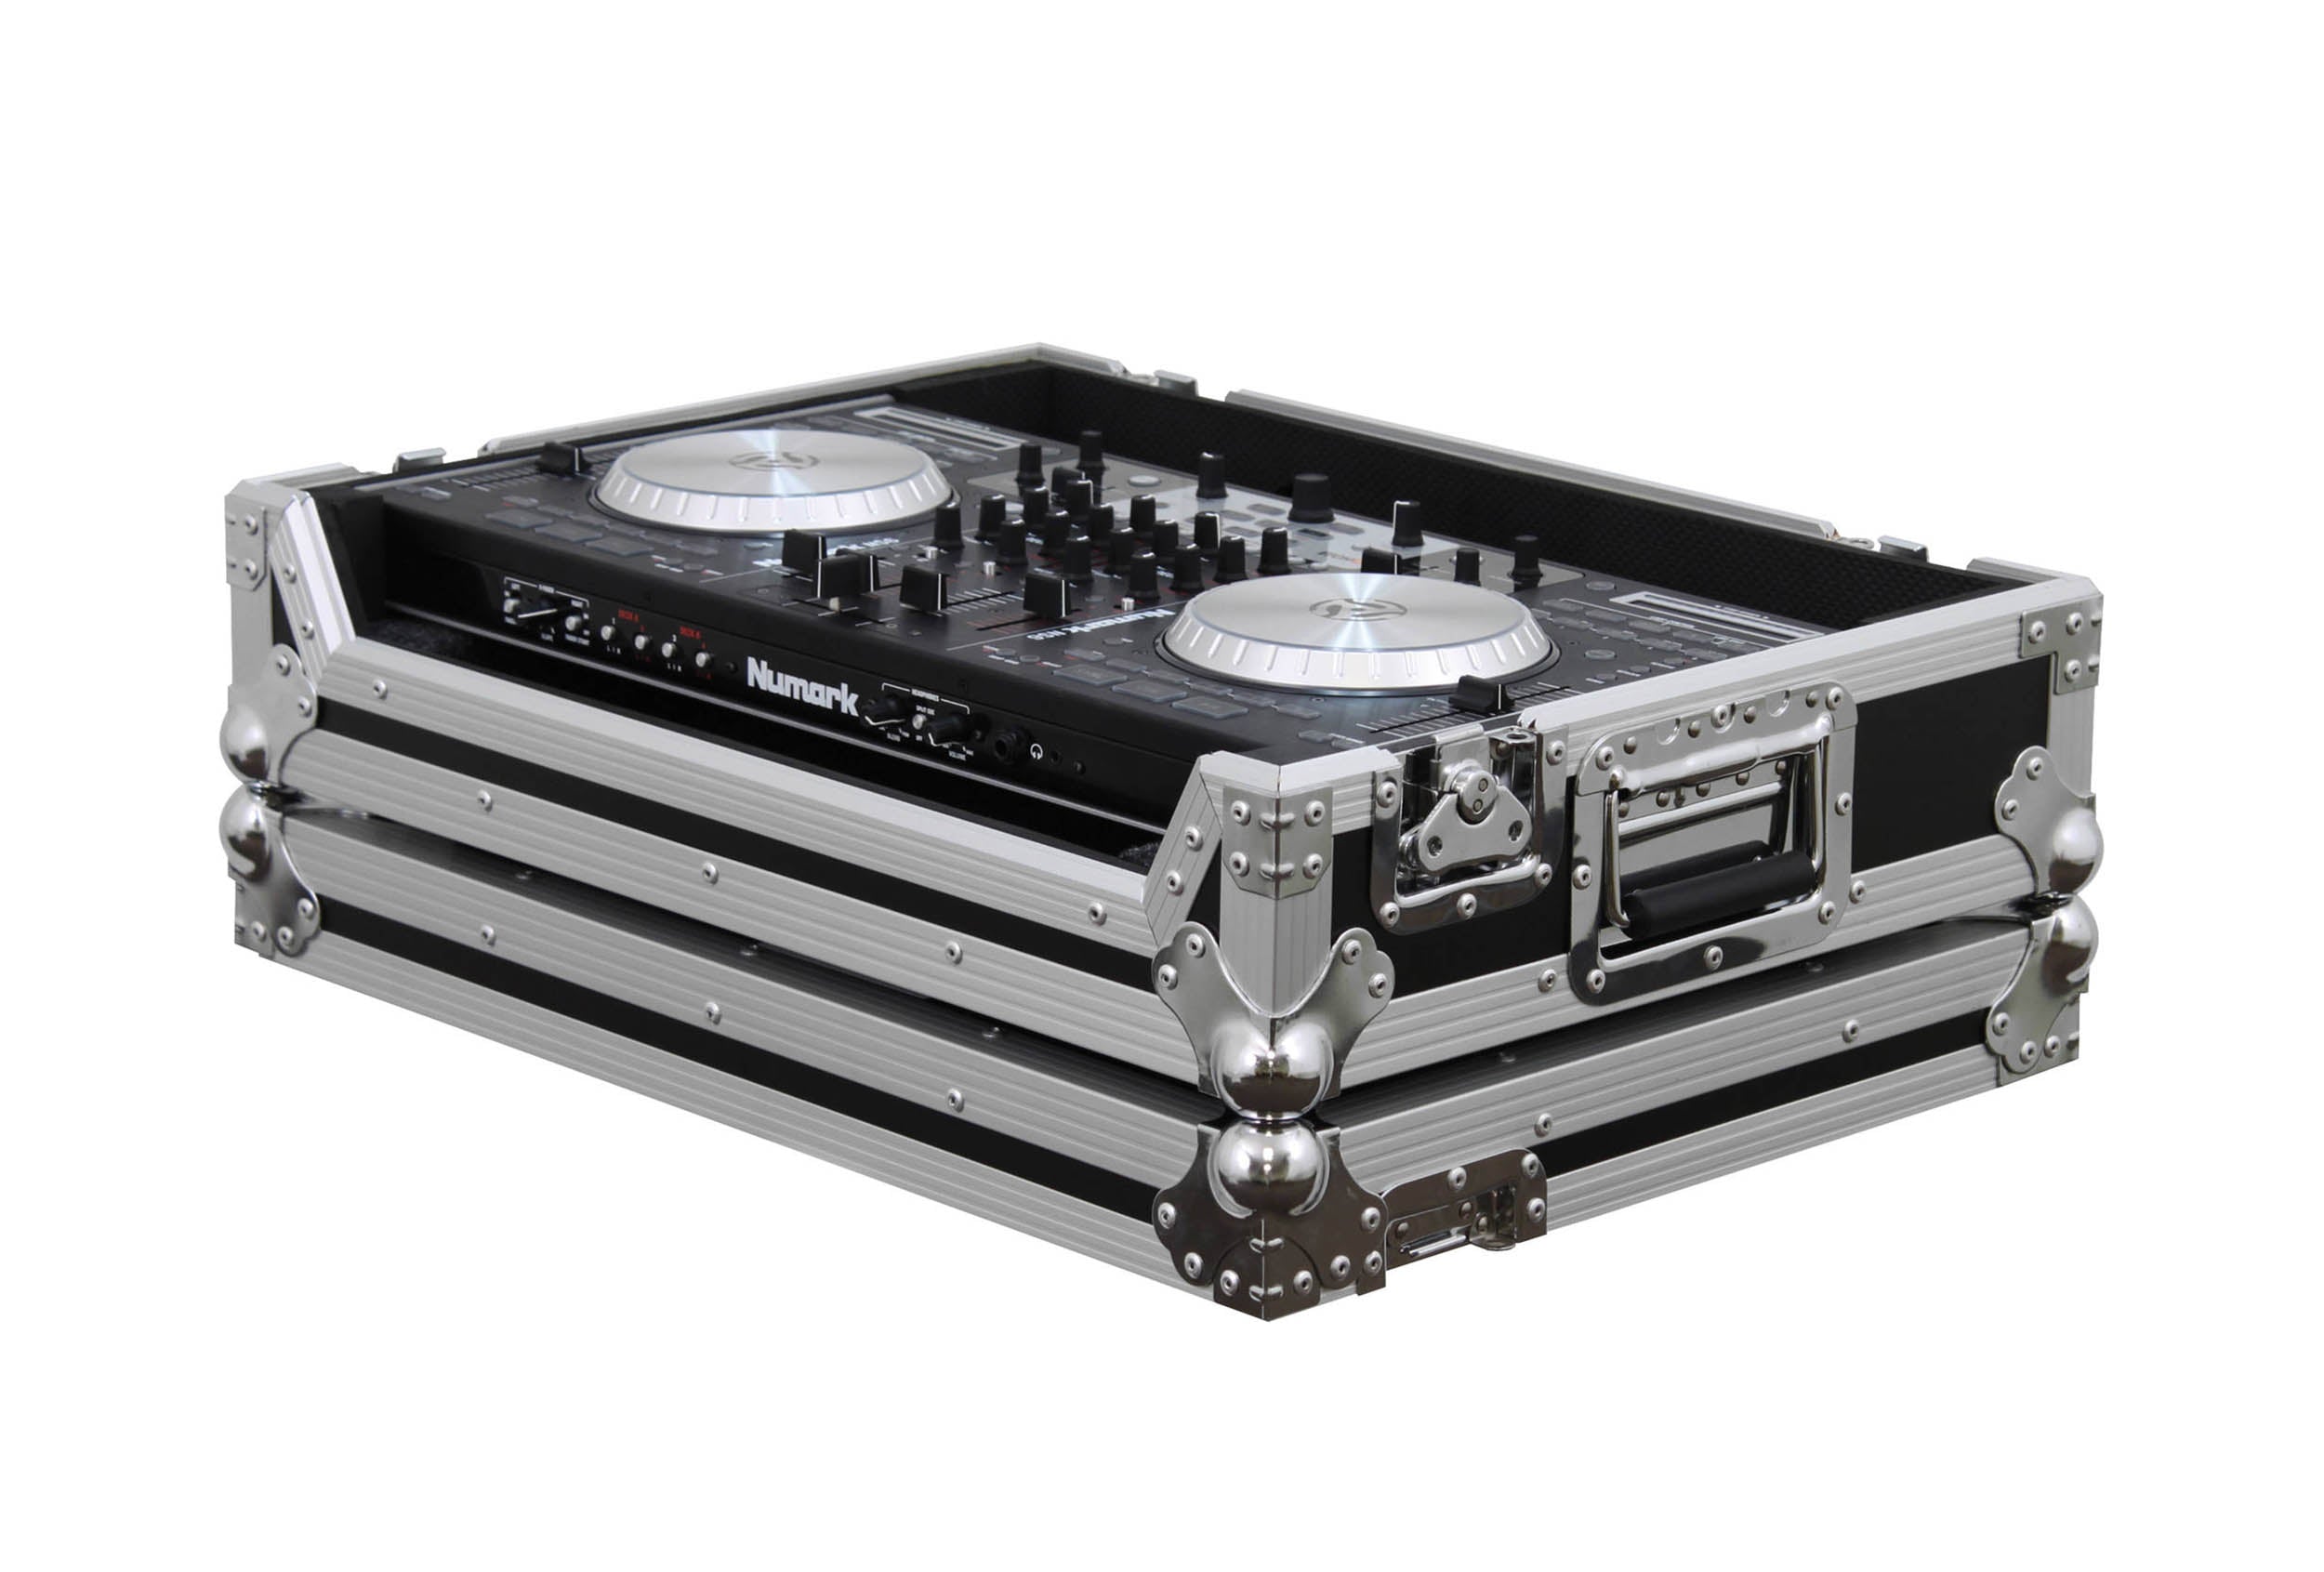 Odyssey FRNS6 Numark NS6 DJ MIDI Controller Flight Case in Black and C